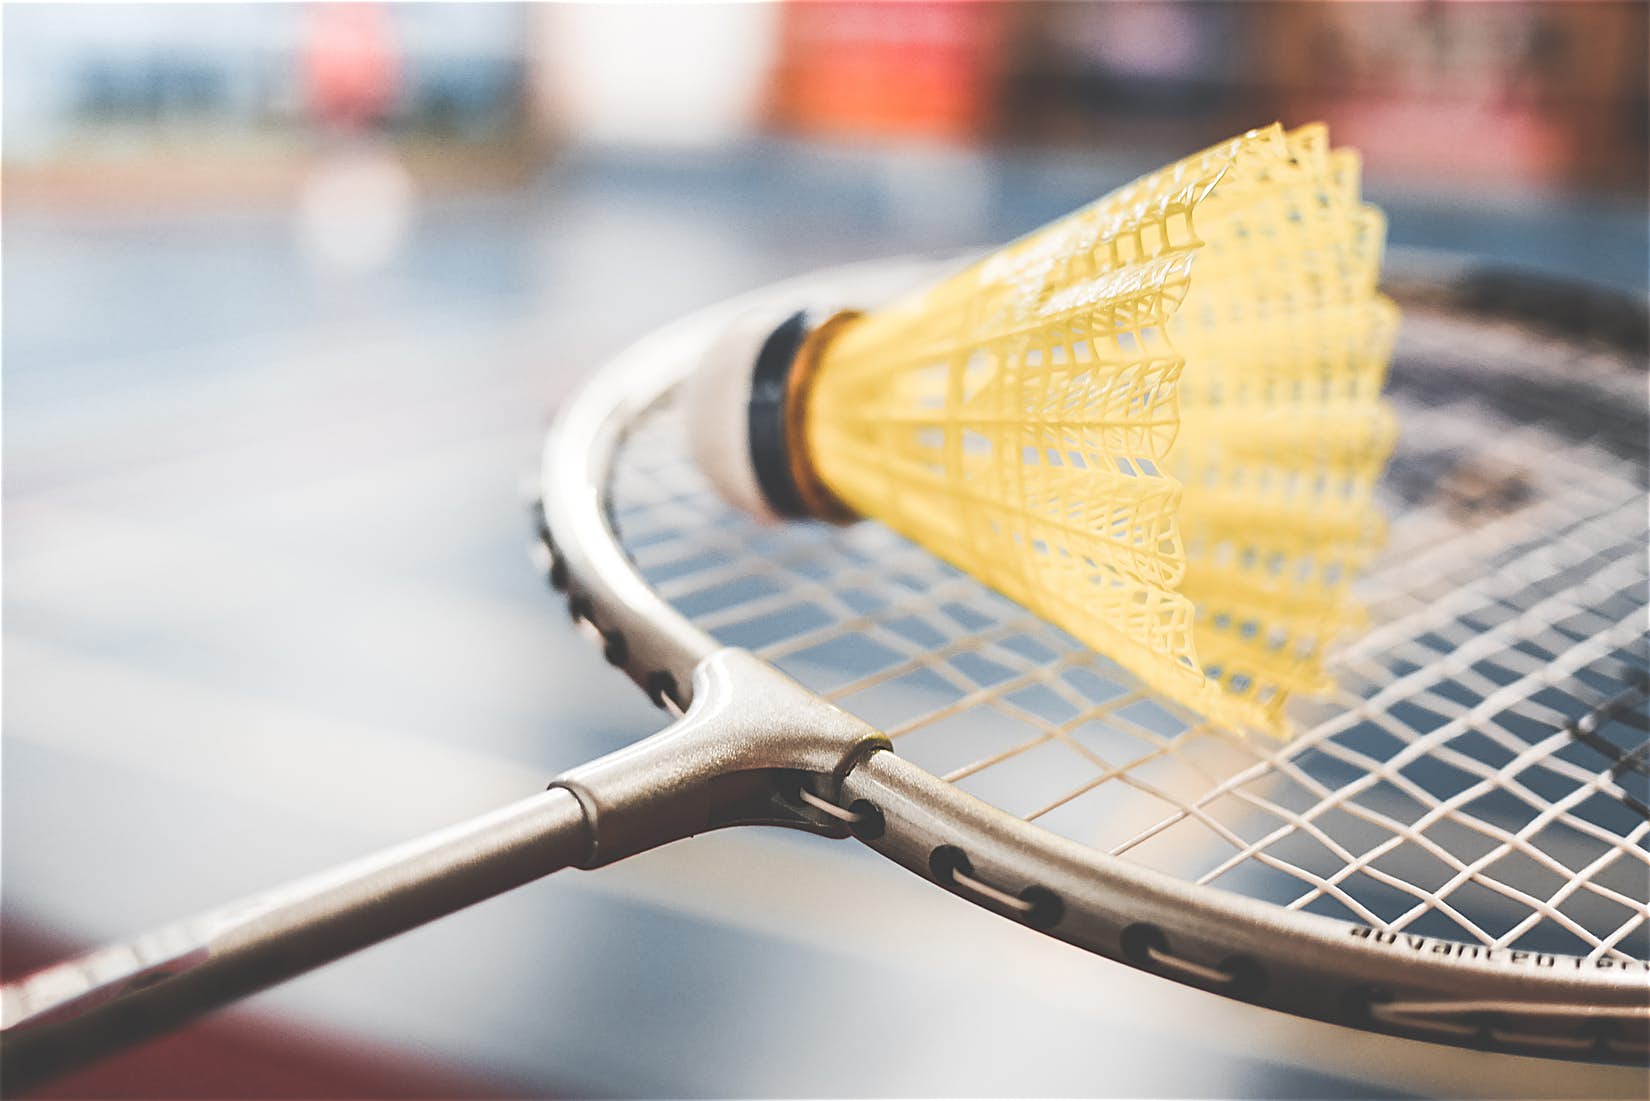 5 Petua Memilih Raket Badminton, Apa yang Perlu Diperhatikan?